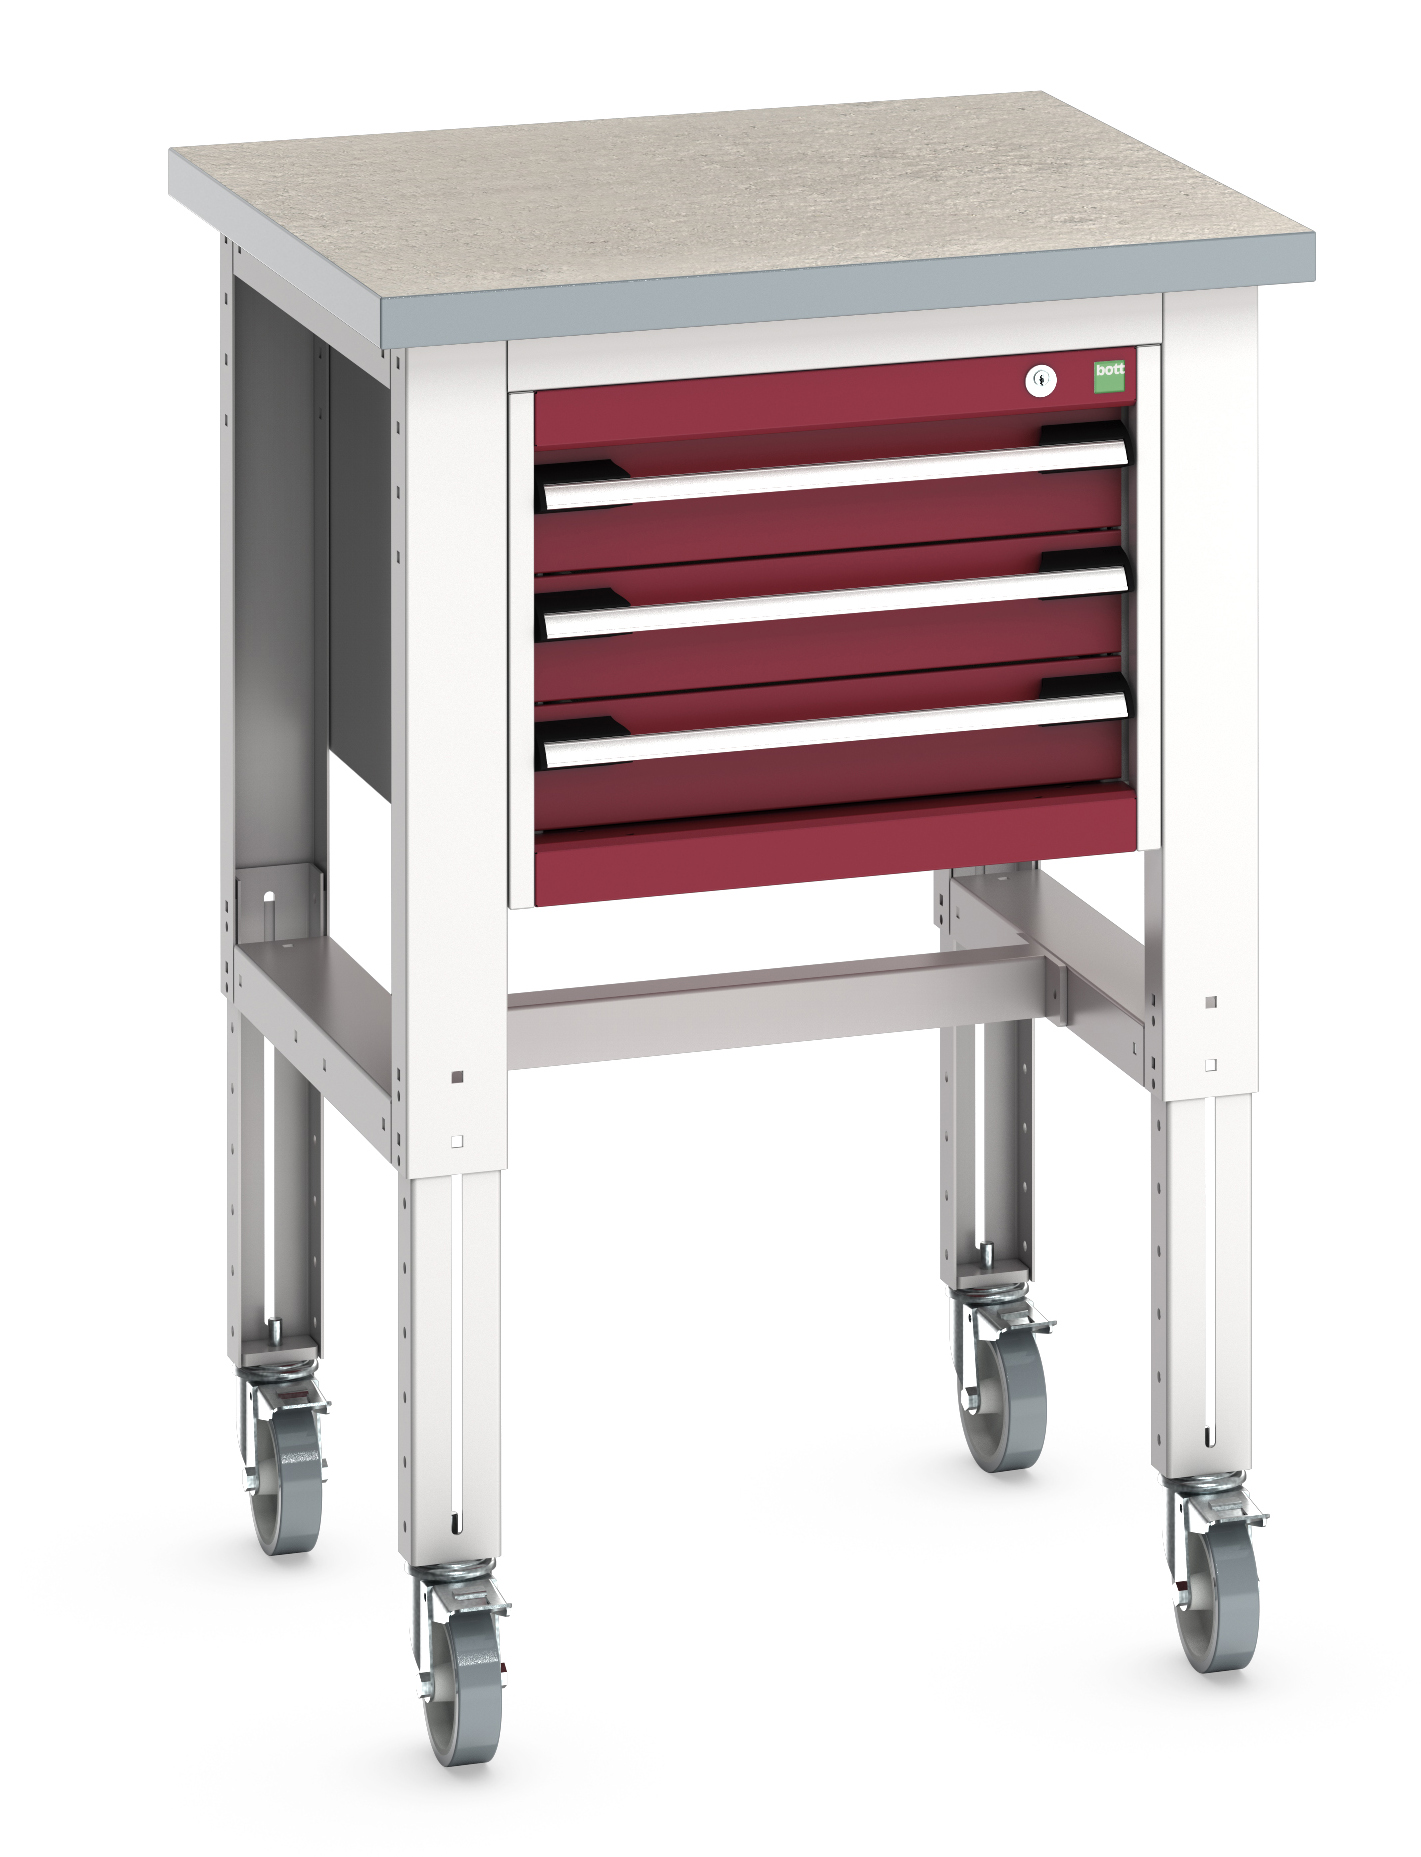 Bott Cubio Adjustable Height Mobile Workstand With 3 Drawer Cabinet - 41003529.24V